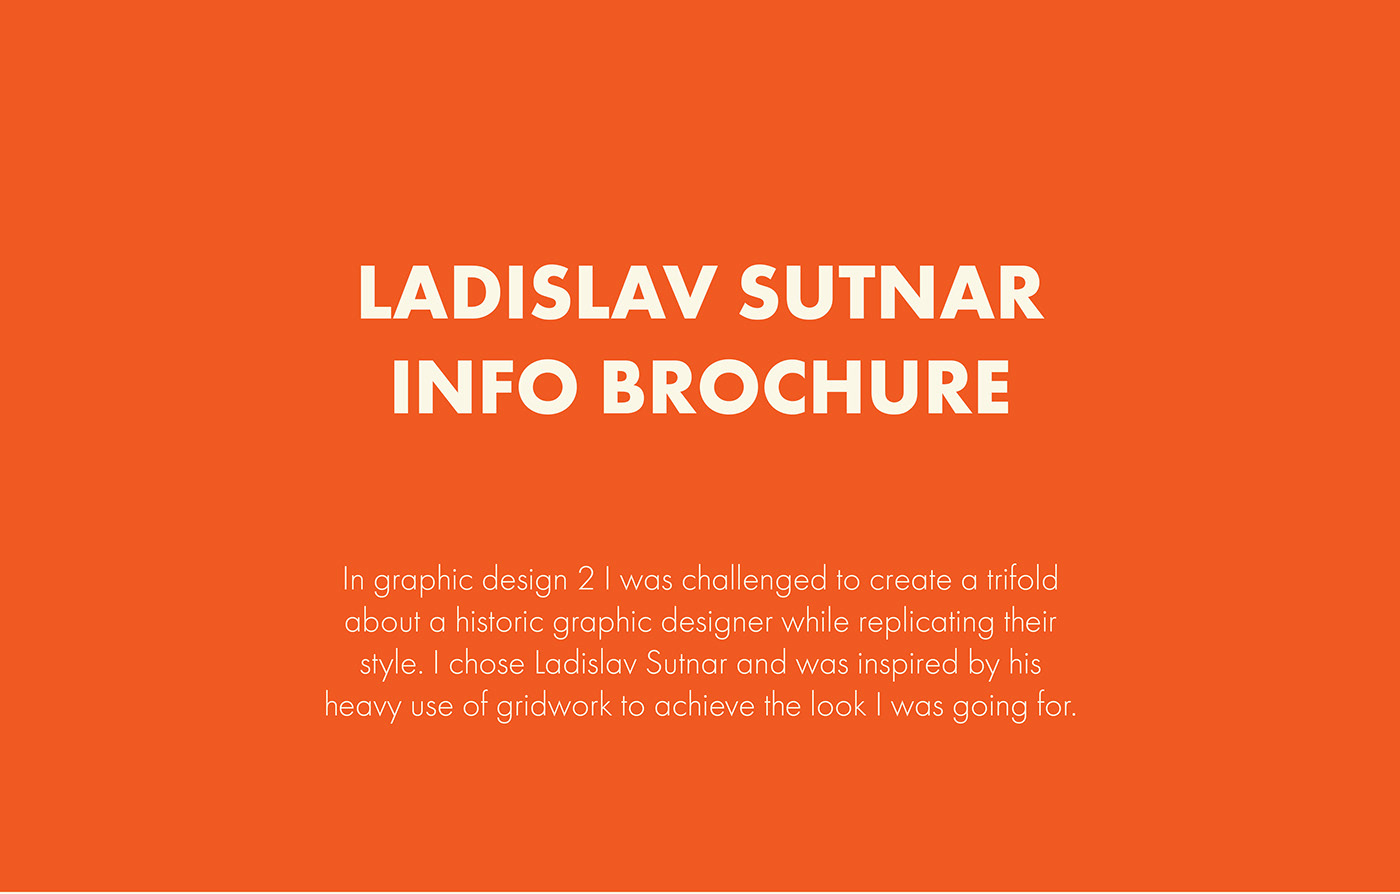 brochure flyer graphic design 2 zuniga ladislav sutnar Layout